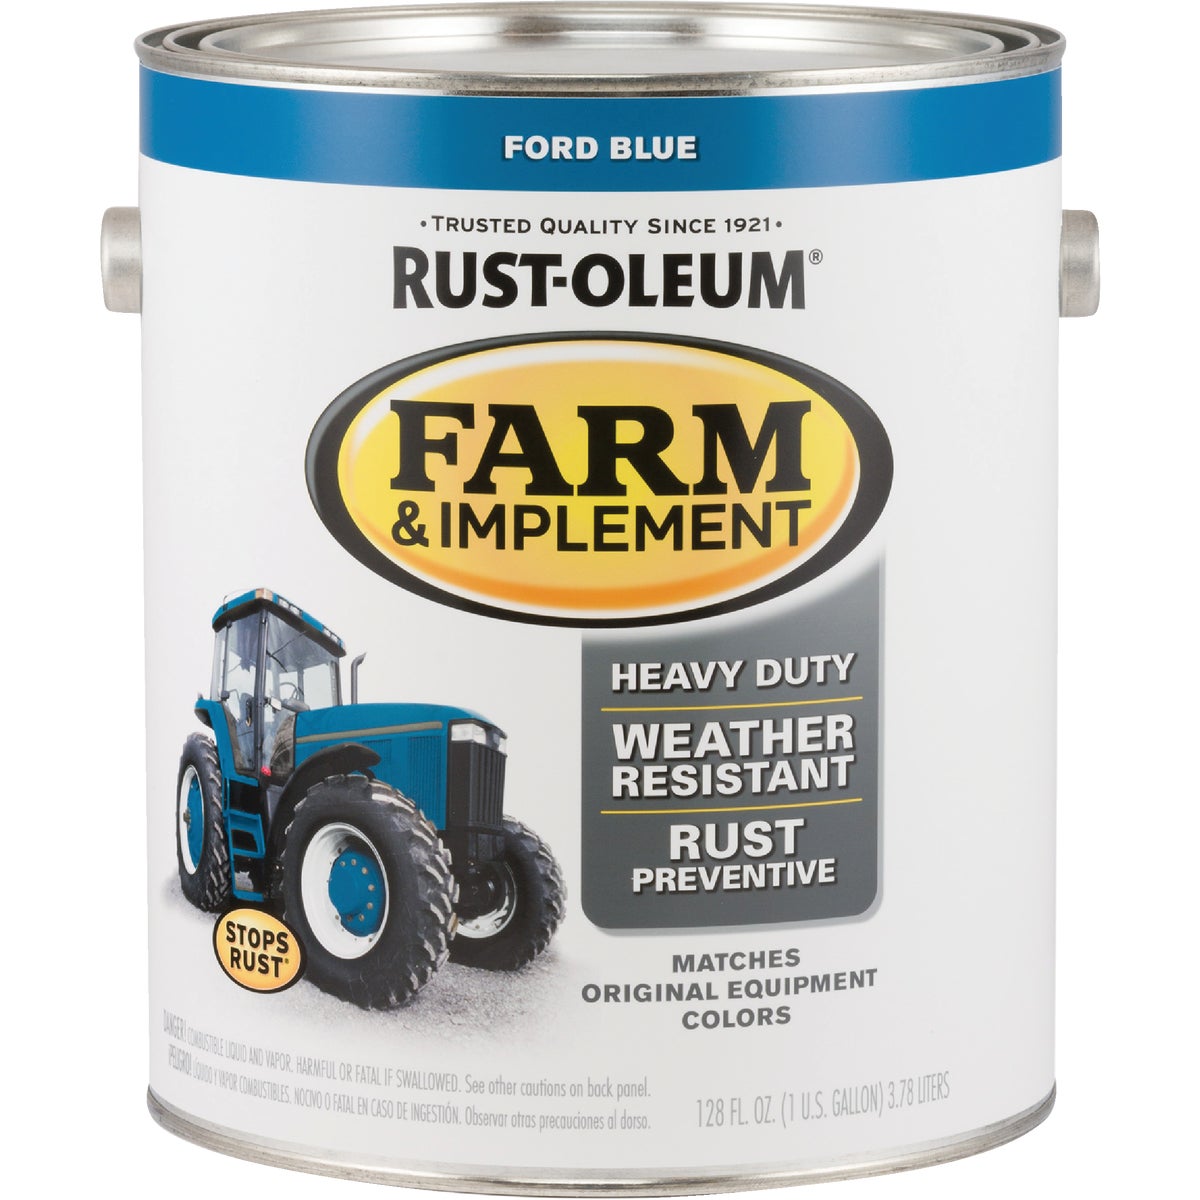 Rust-Oleum 1 Gallon Ford Blue Gloss Farm & Implement Enamel